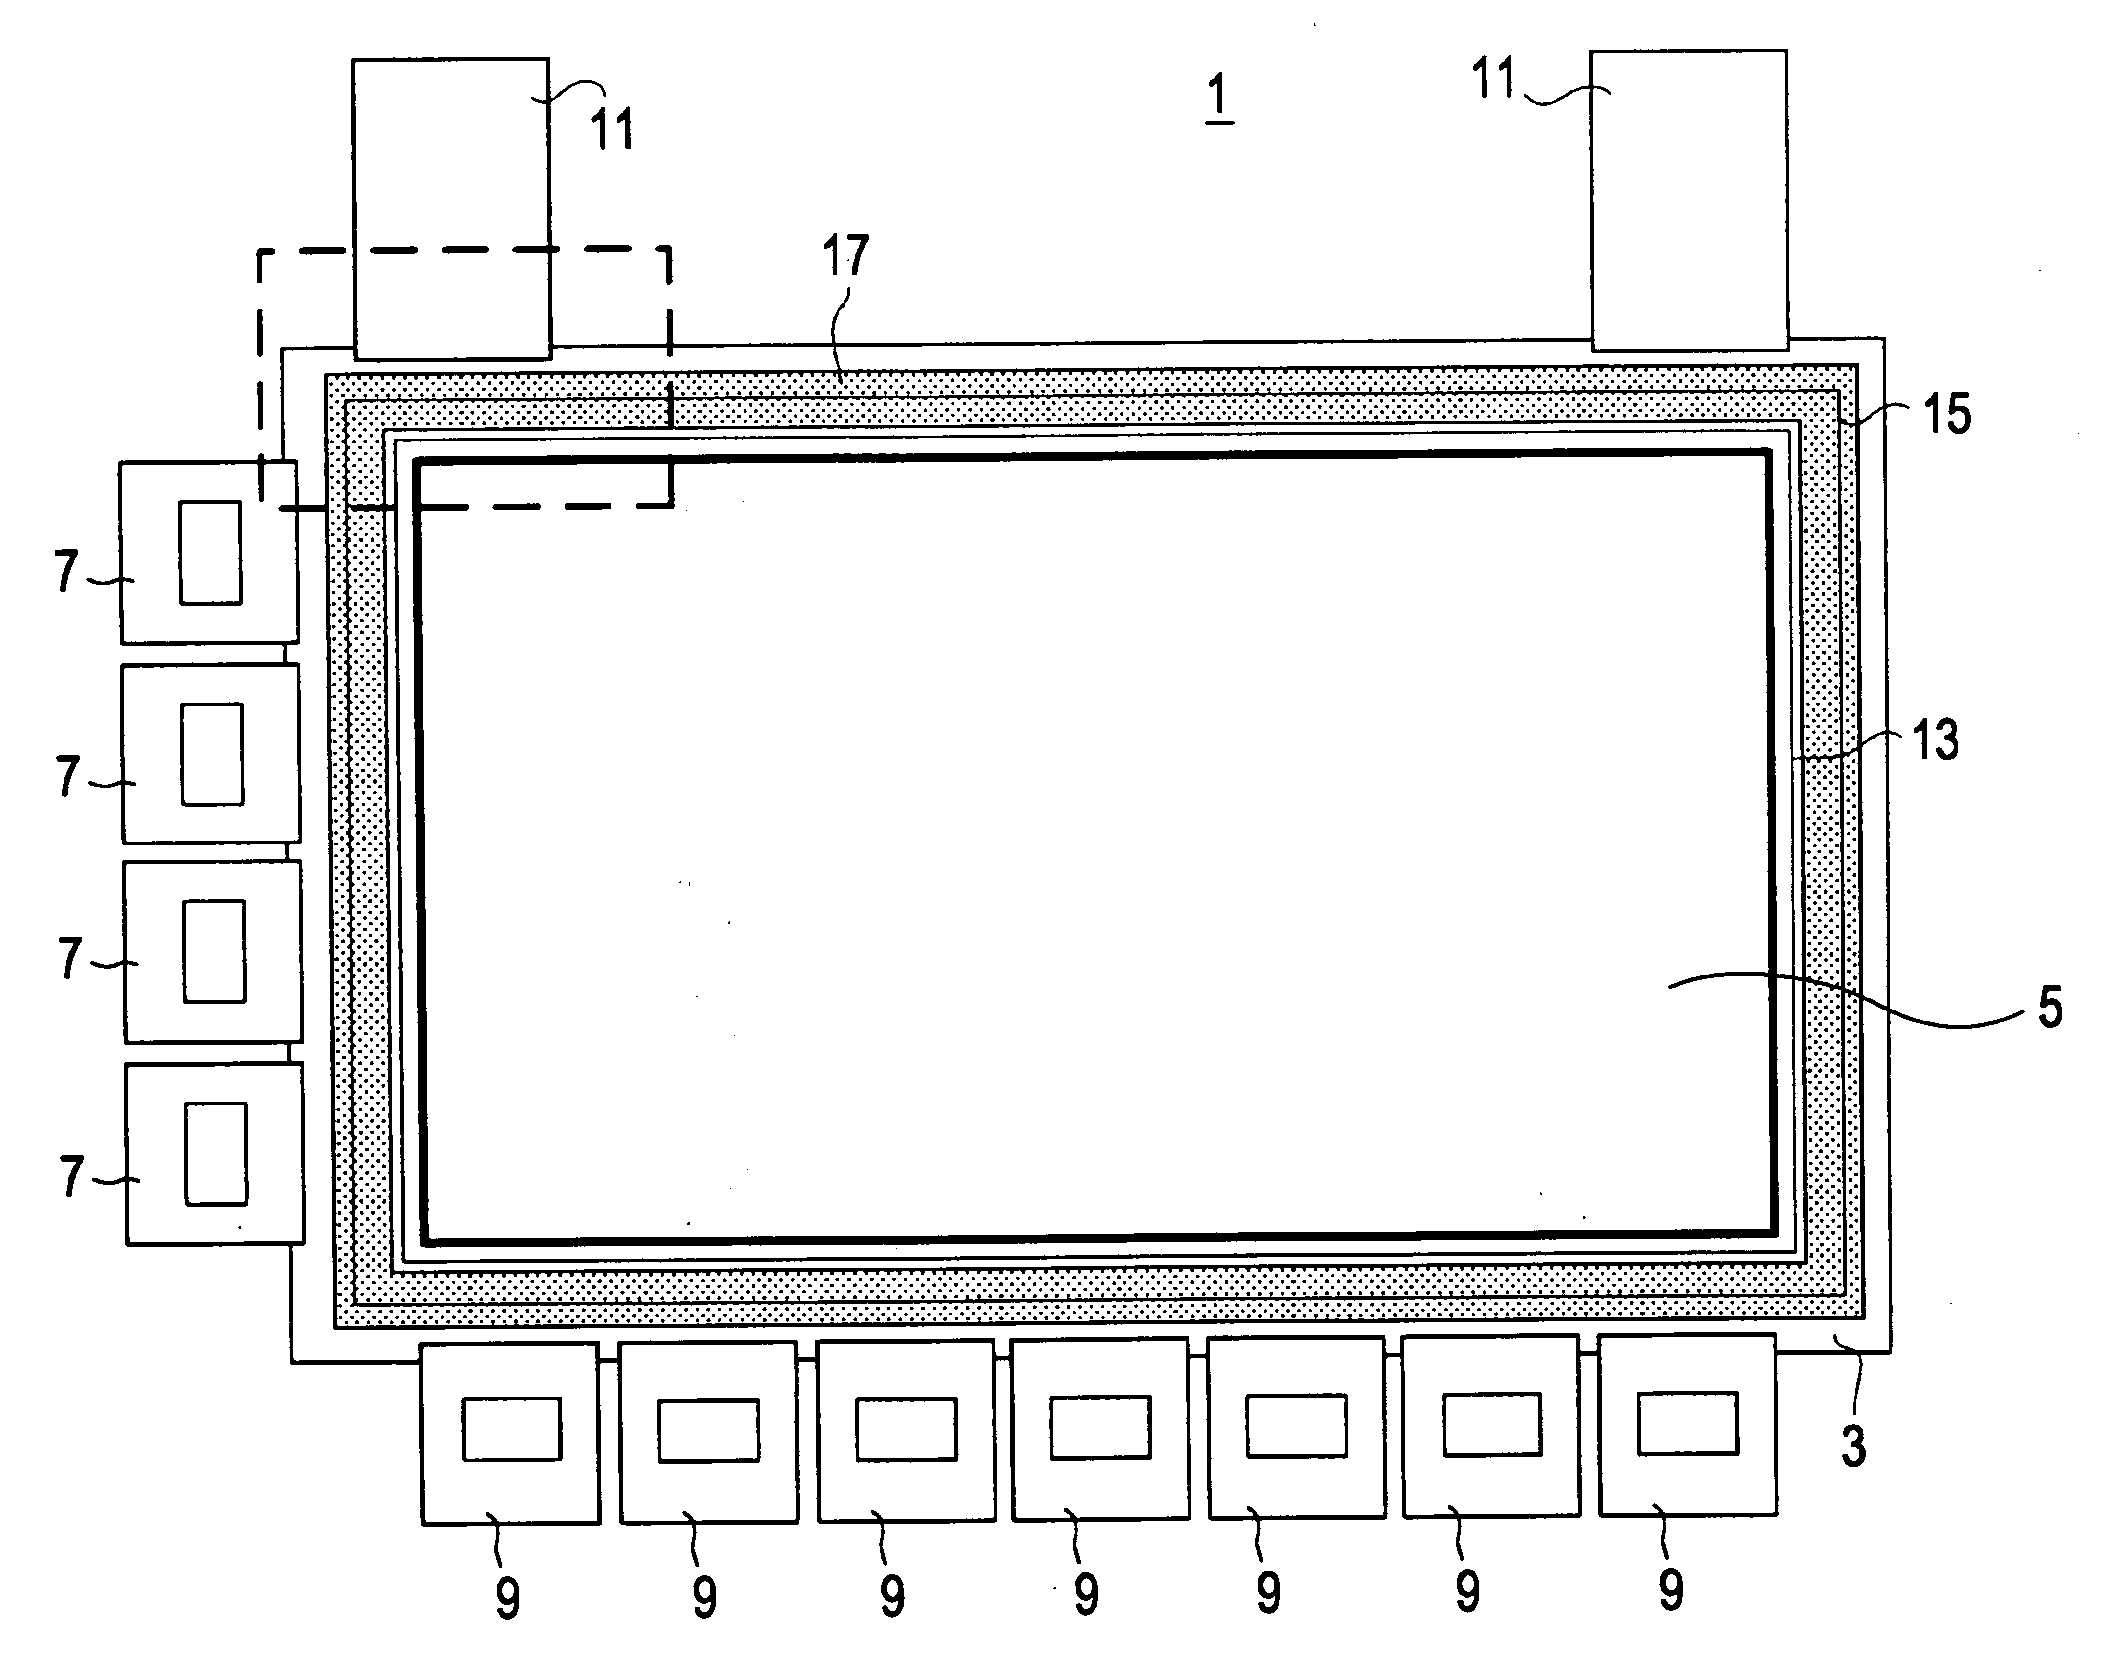 Display panel, electronic device, and mehtod of making display panel